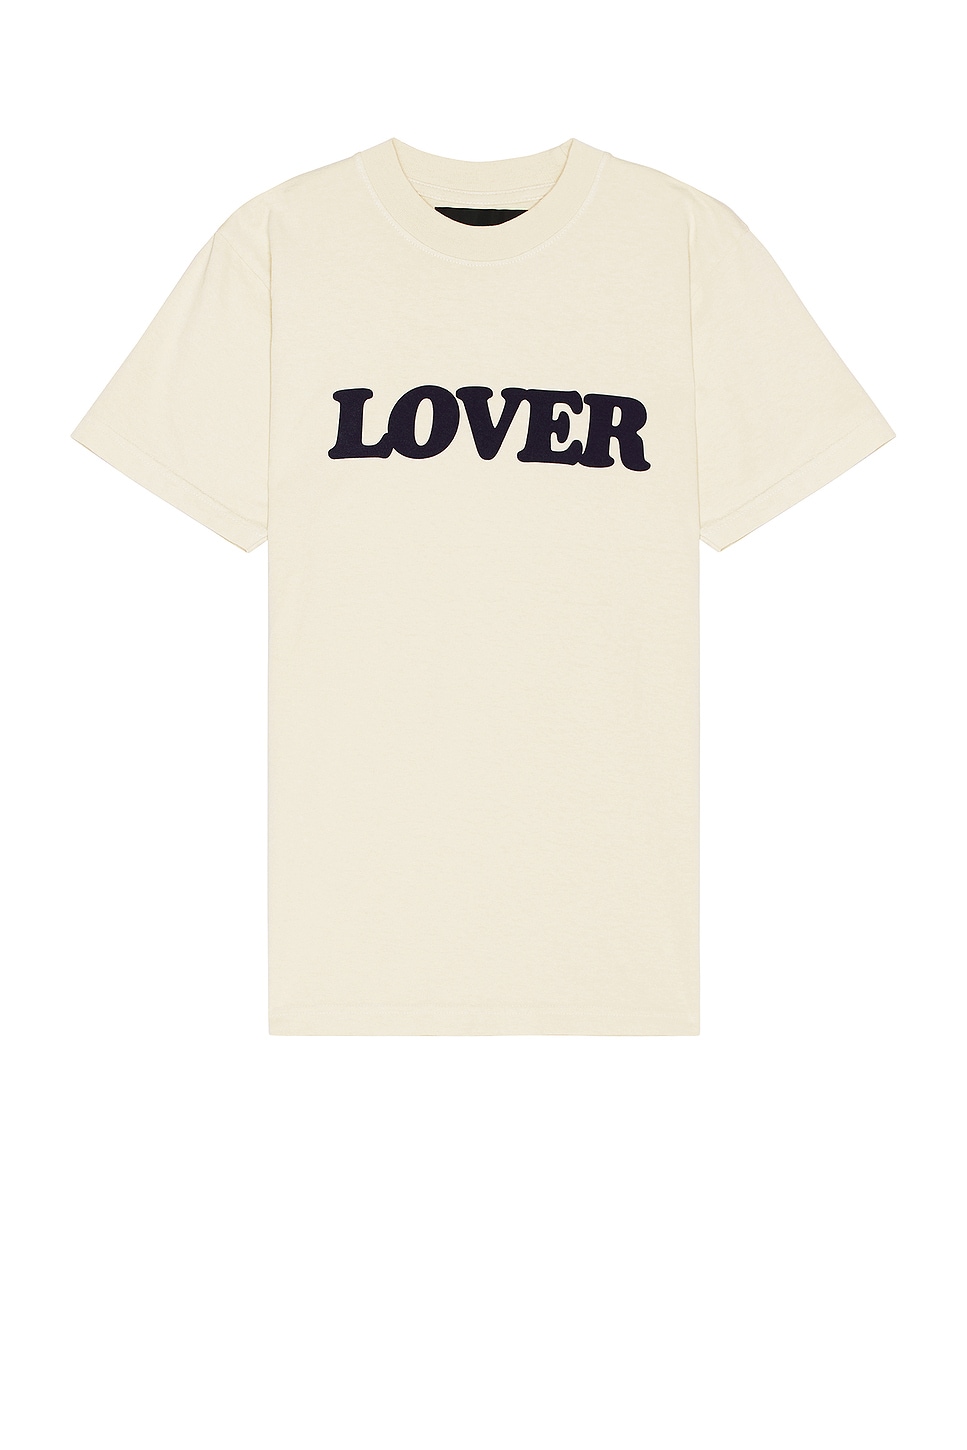 Image 1 of Bianca Chandon Lover Big Logo Shirt in Light Khaki